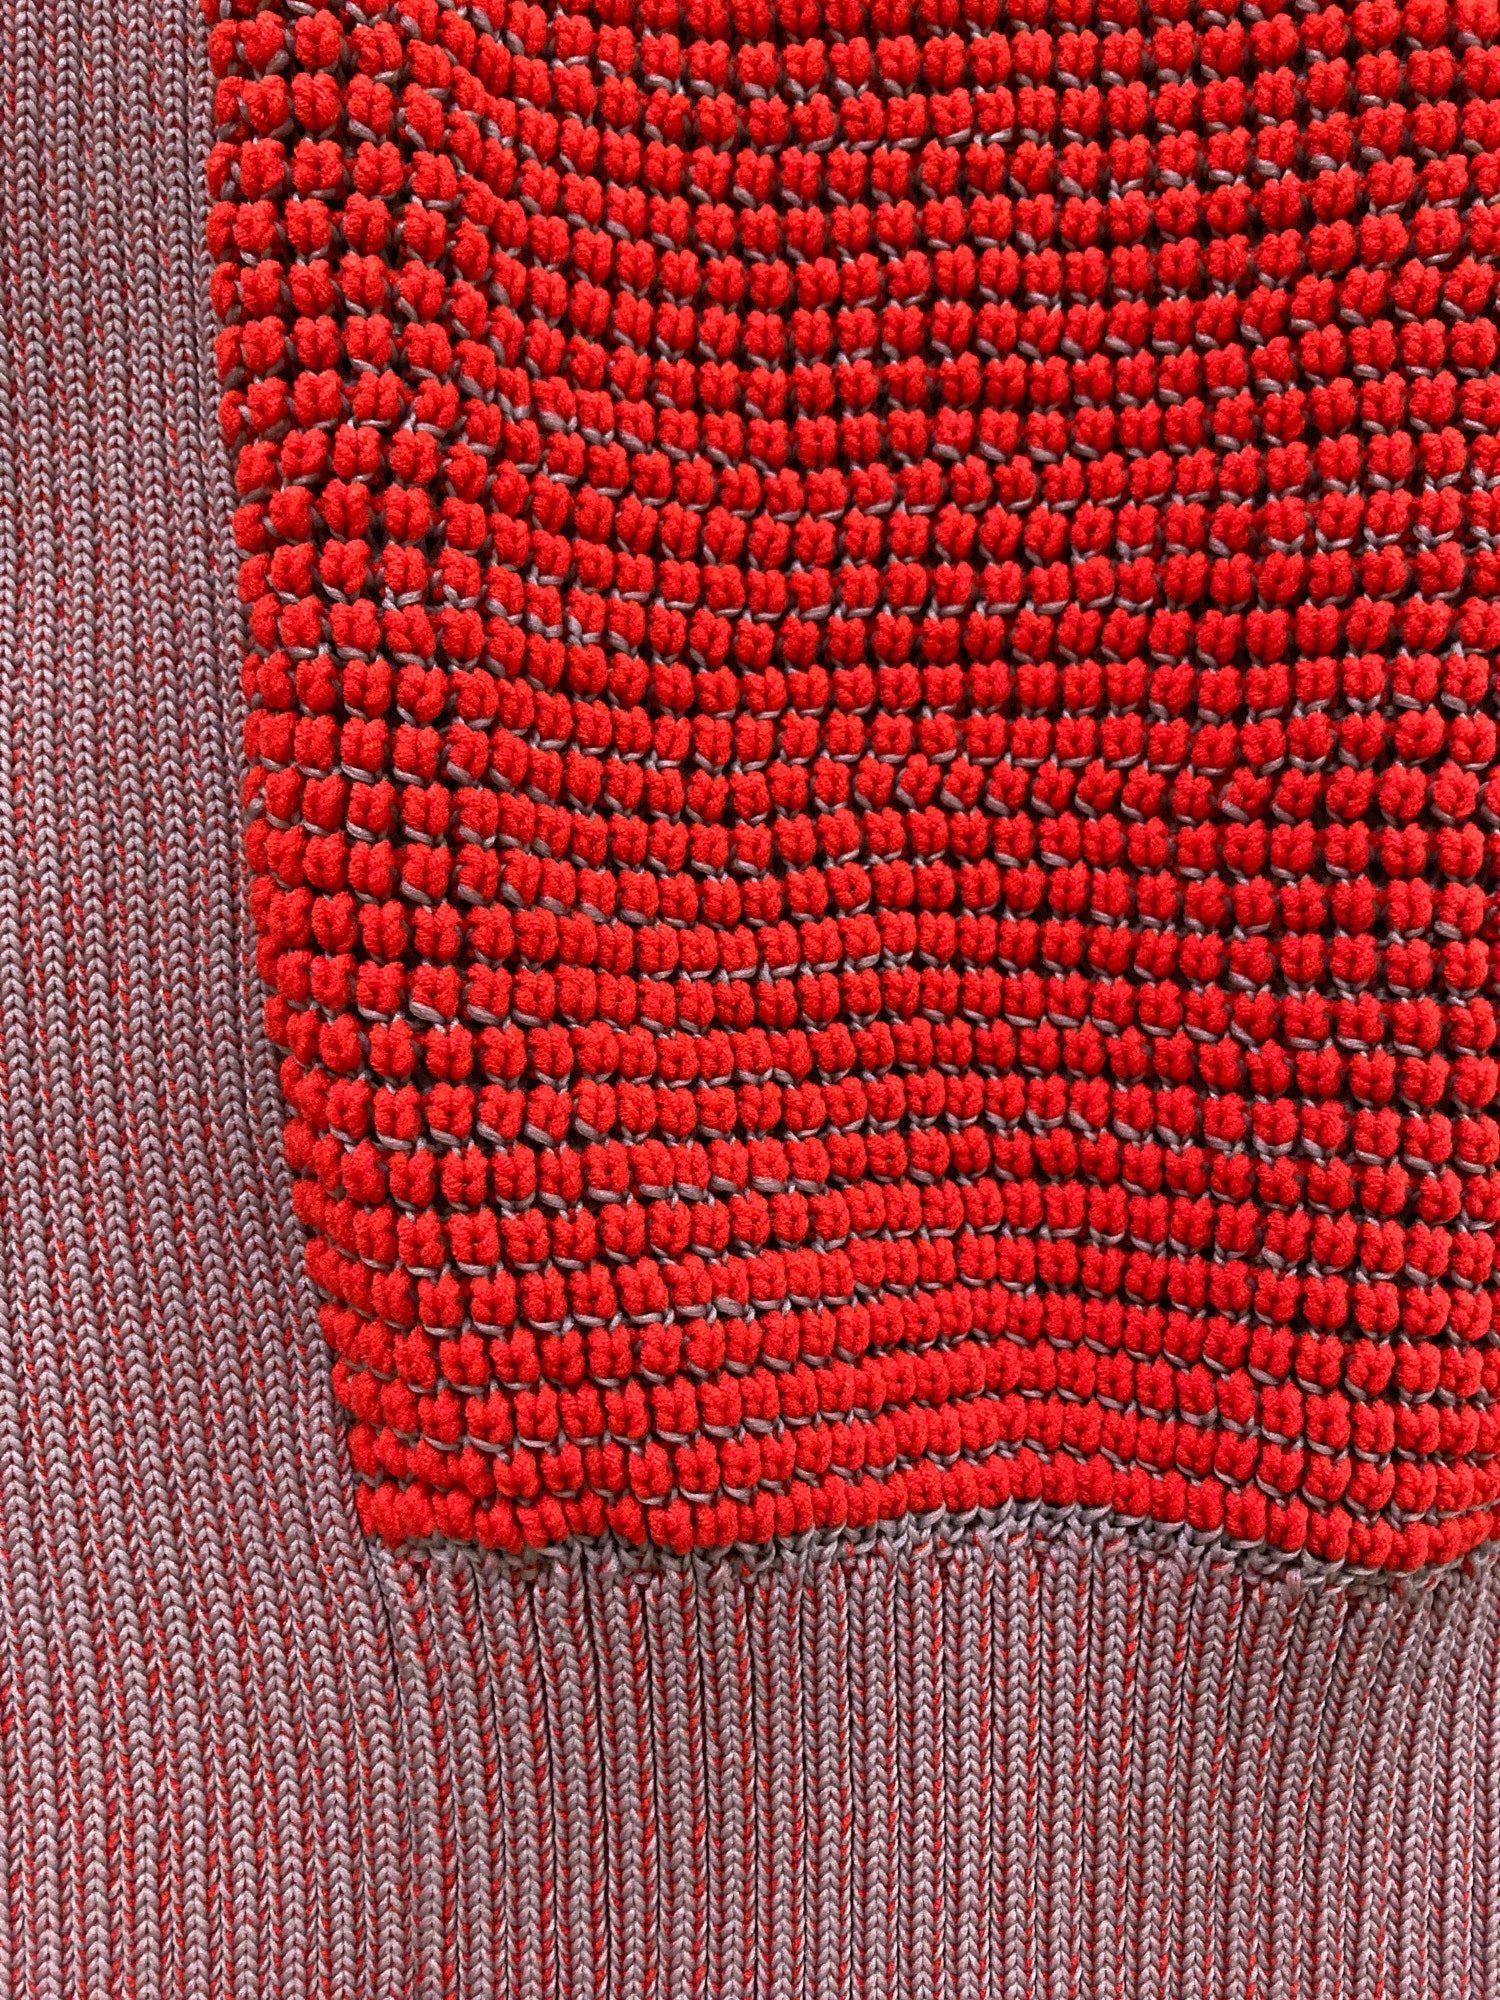 Trunk Hiroko Koshino grey red knit zipped cardigan - size 40